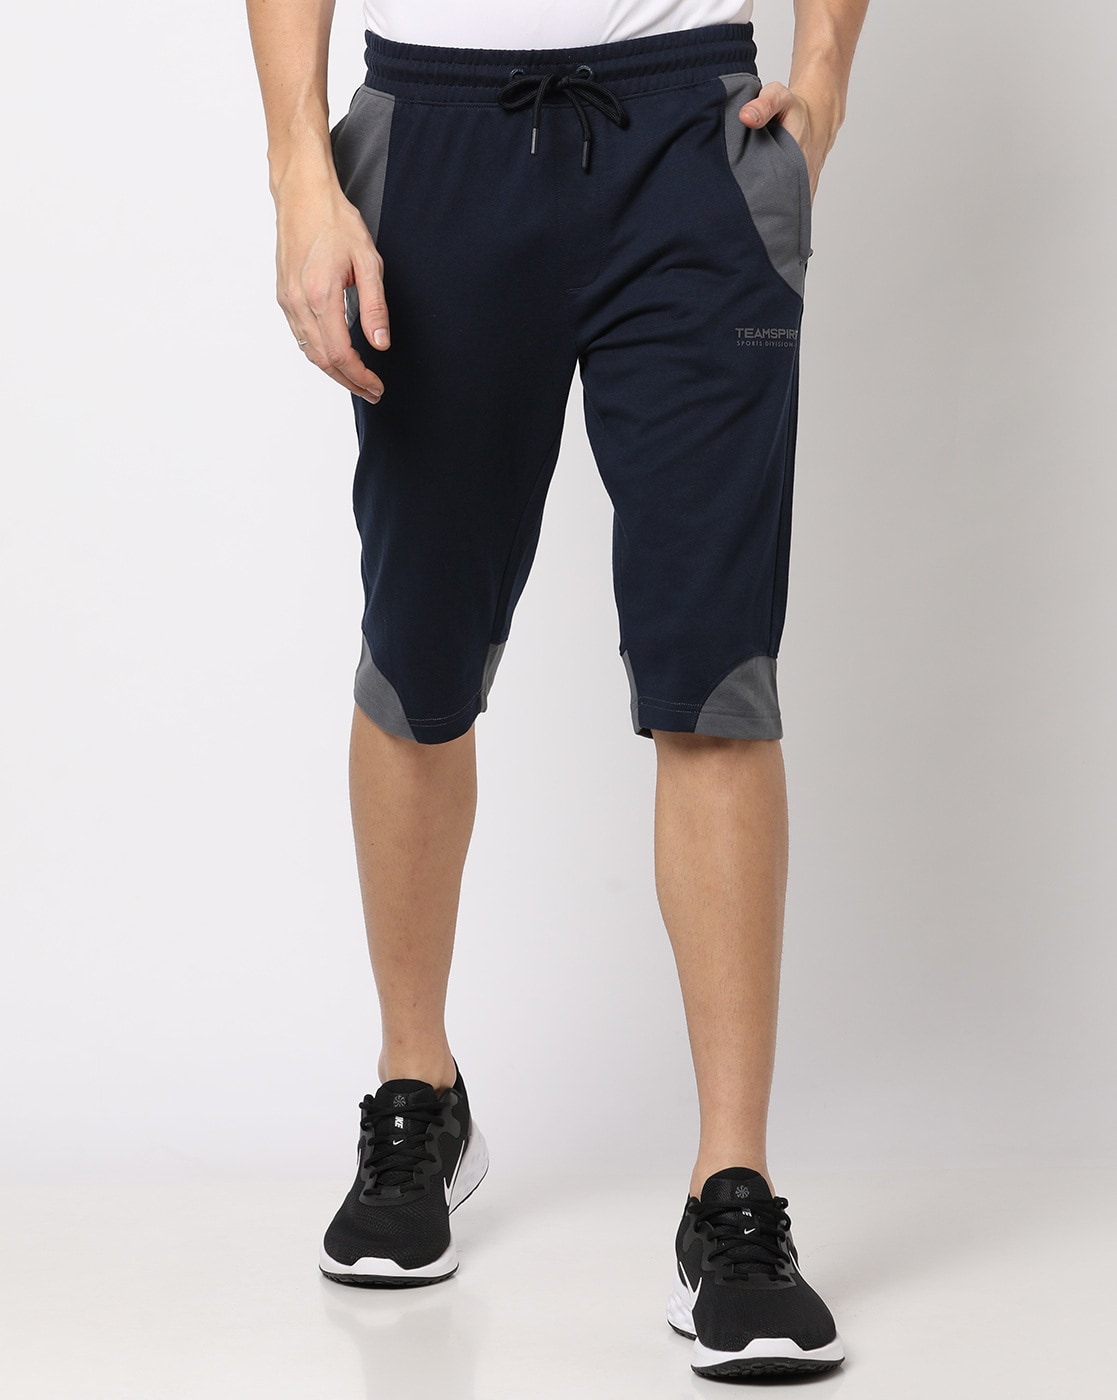 Shorts for Men Buy Men Shorts 34 Pants Online Best Price  GAS Jeans